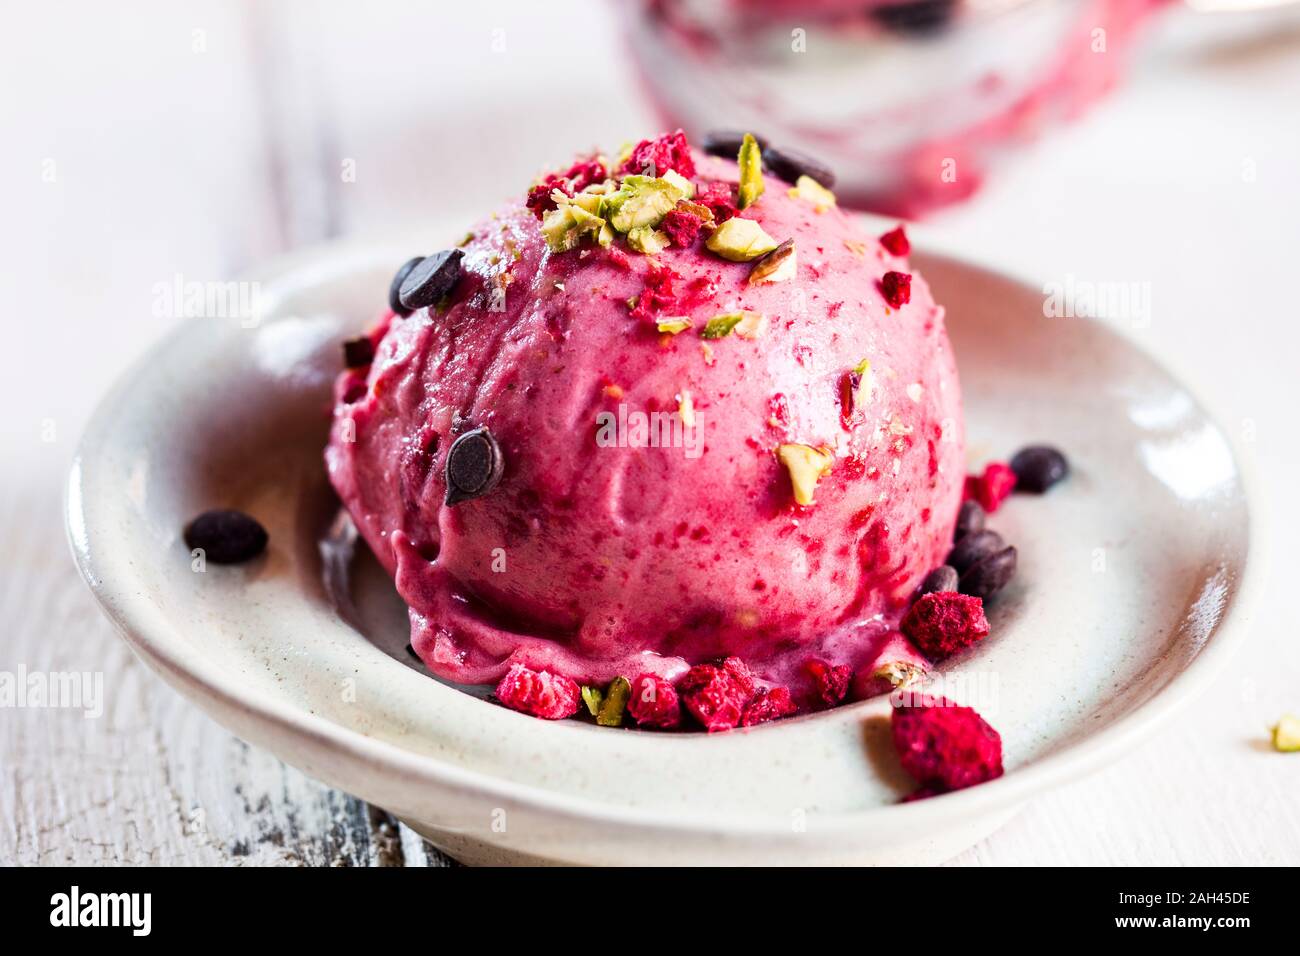 Plate of vegan sugarfree nice cream with raspberries, bananas, sprinkled pistachios and chocolate Stock Photo